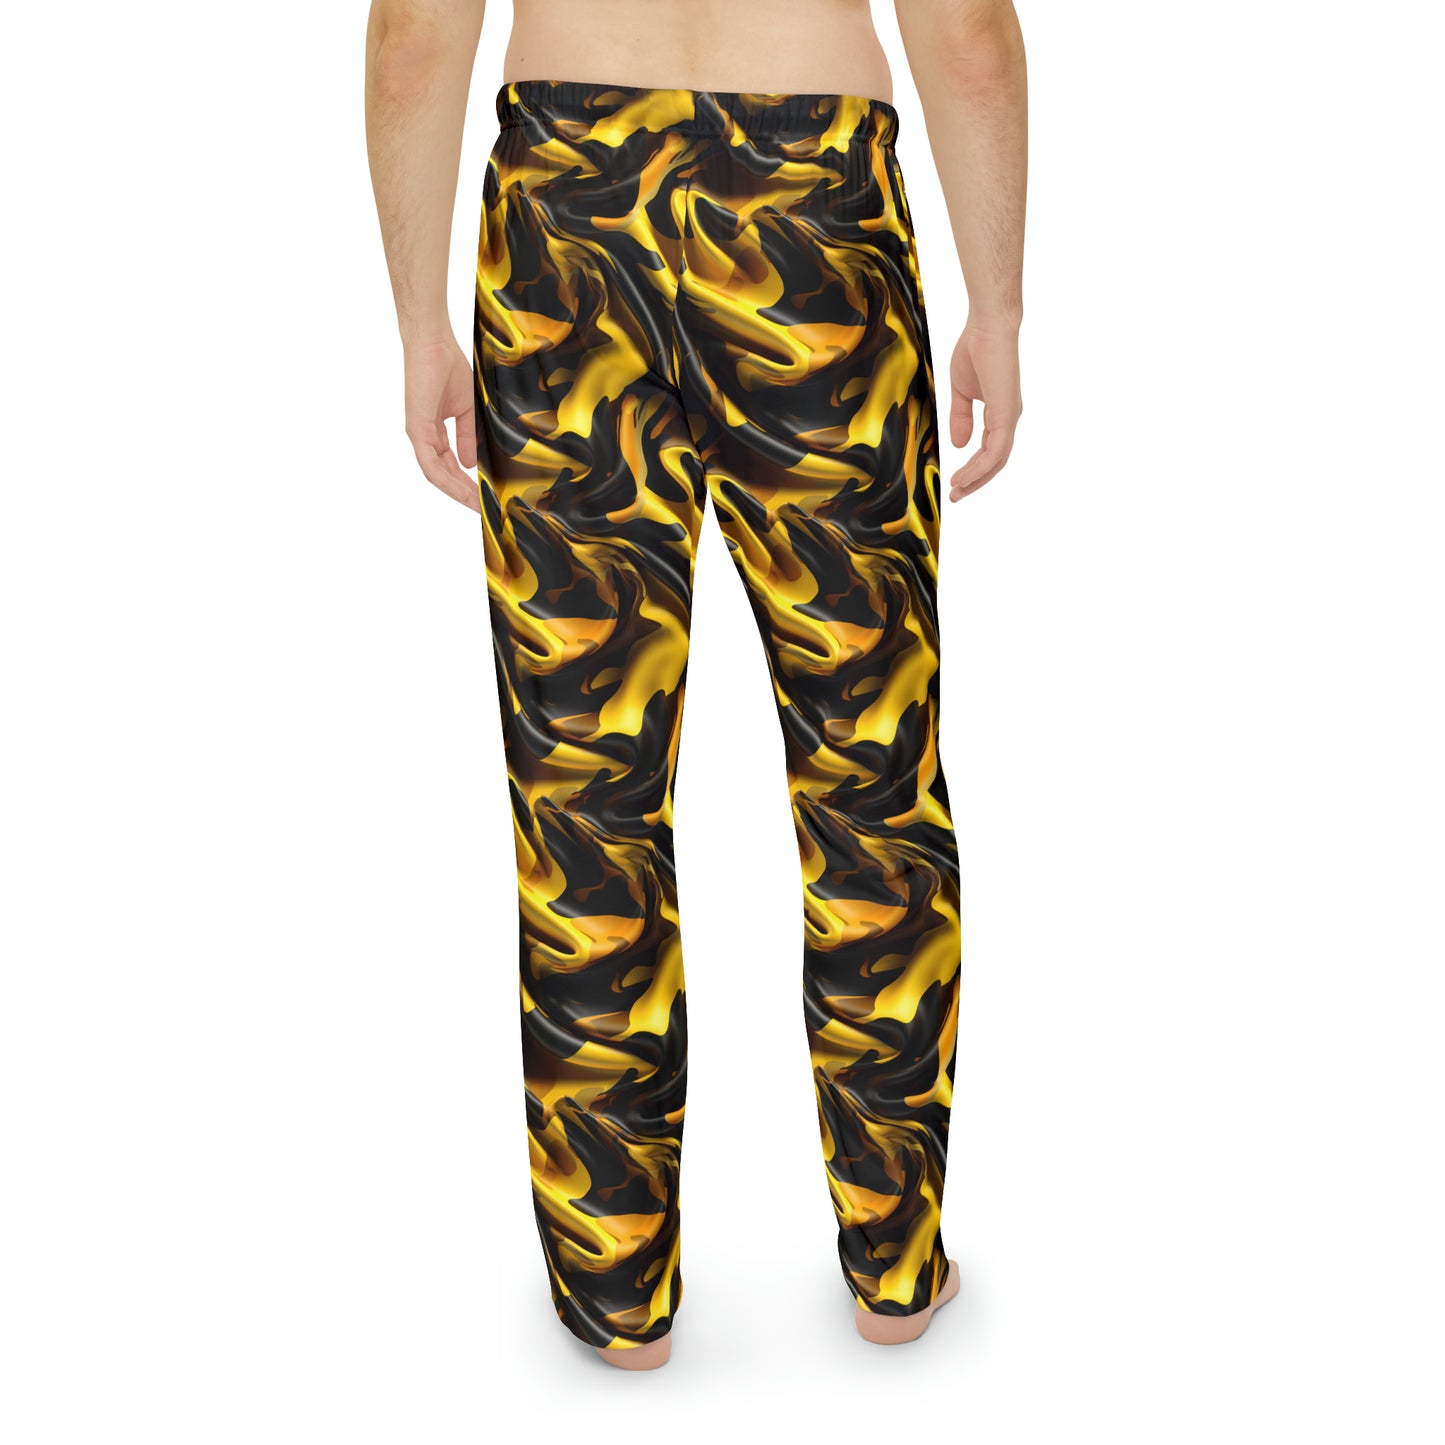 Black & Gold Satin Men's Pajama Pants